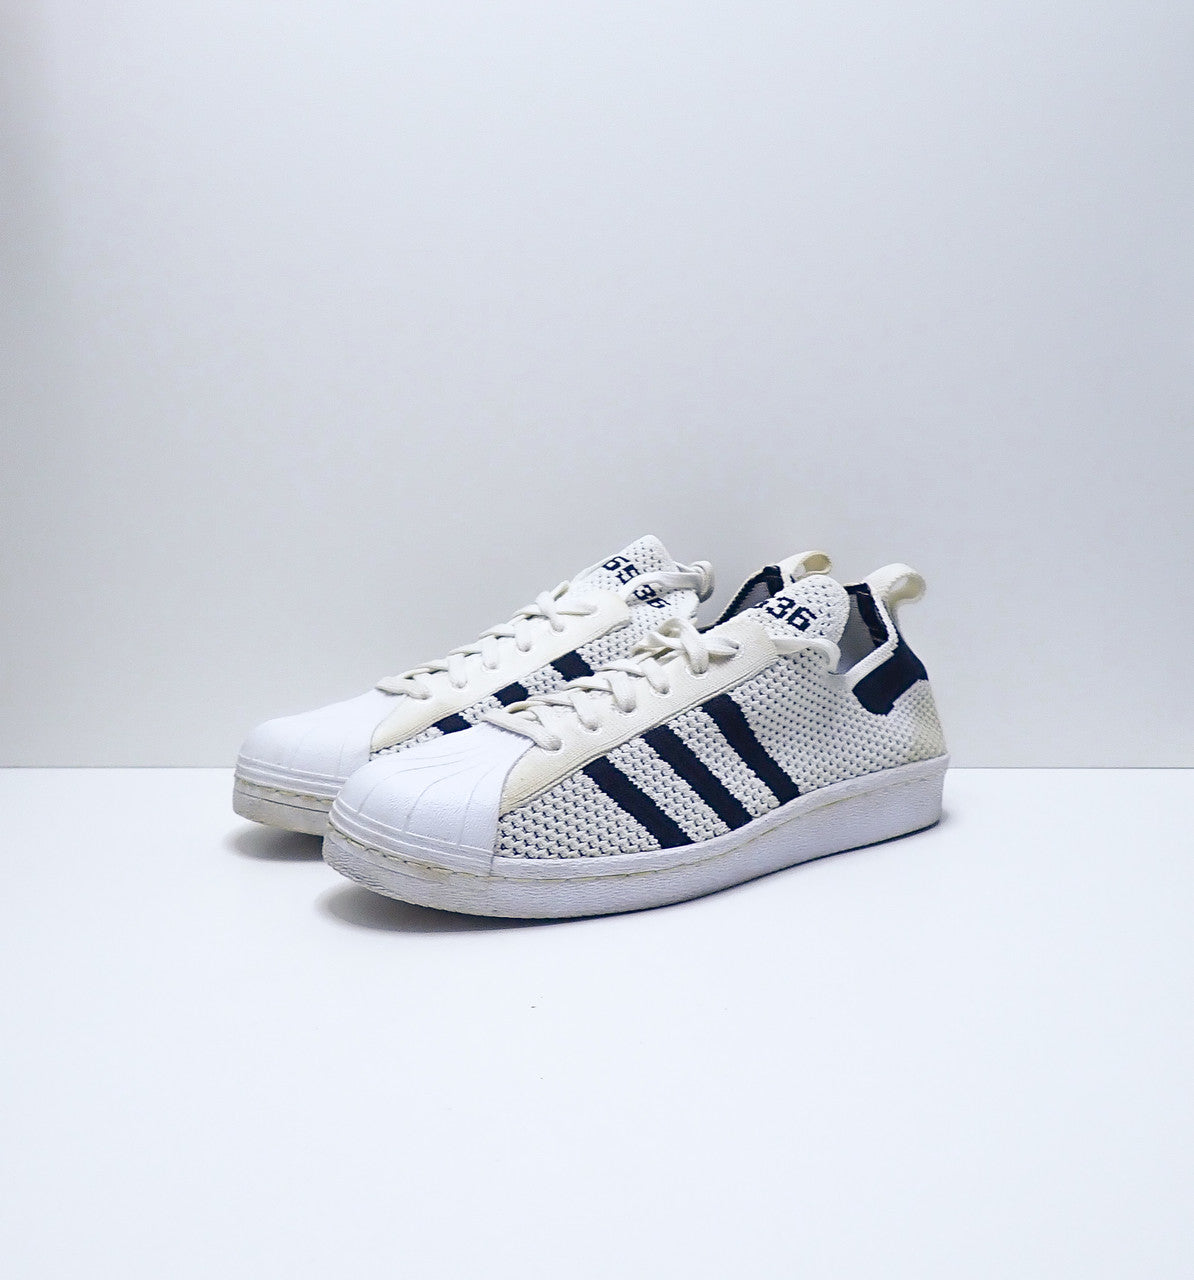 Adidas Superstar 80s Primeknit